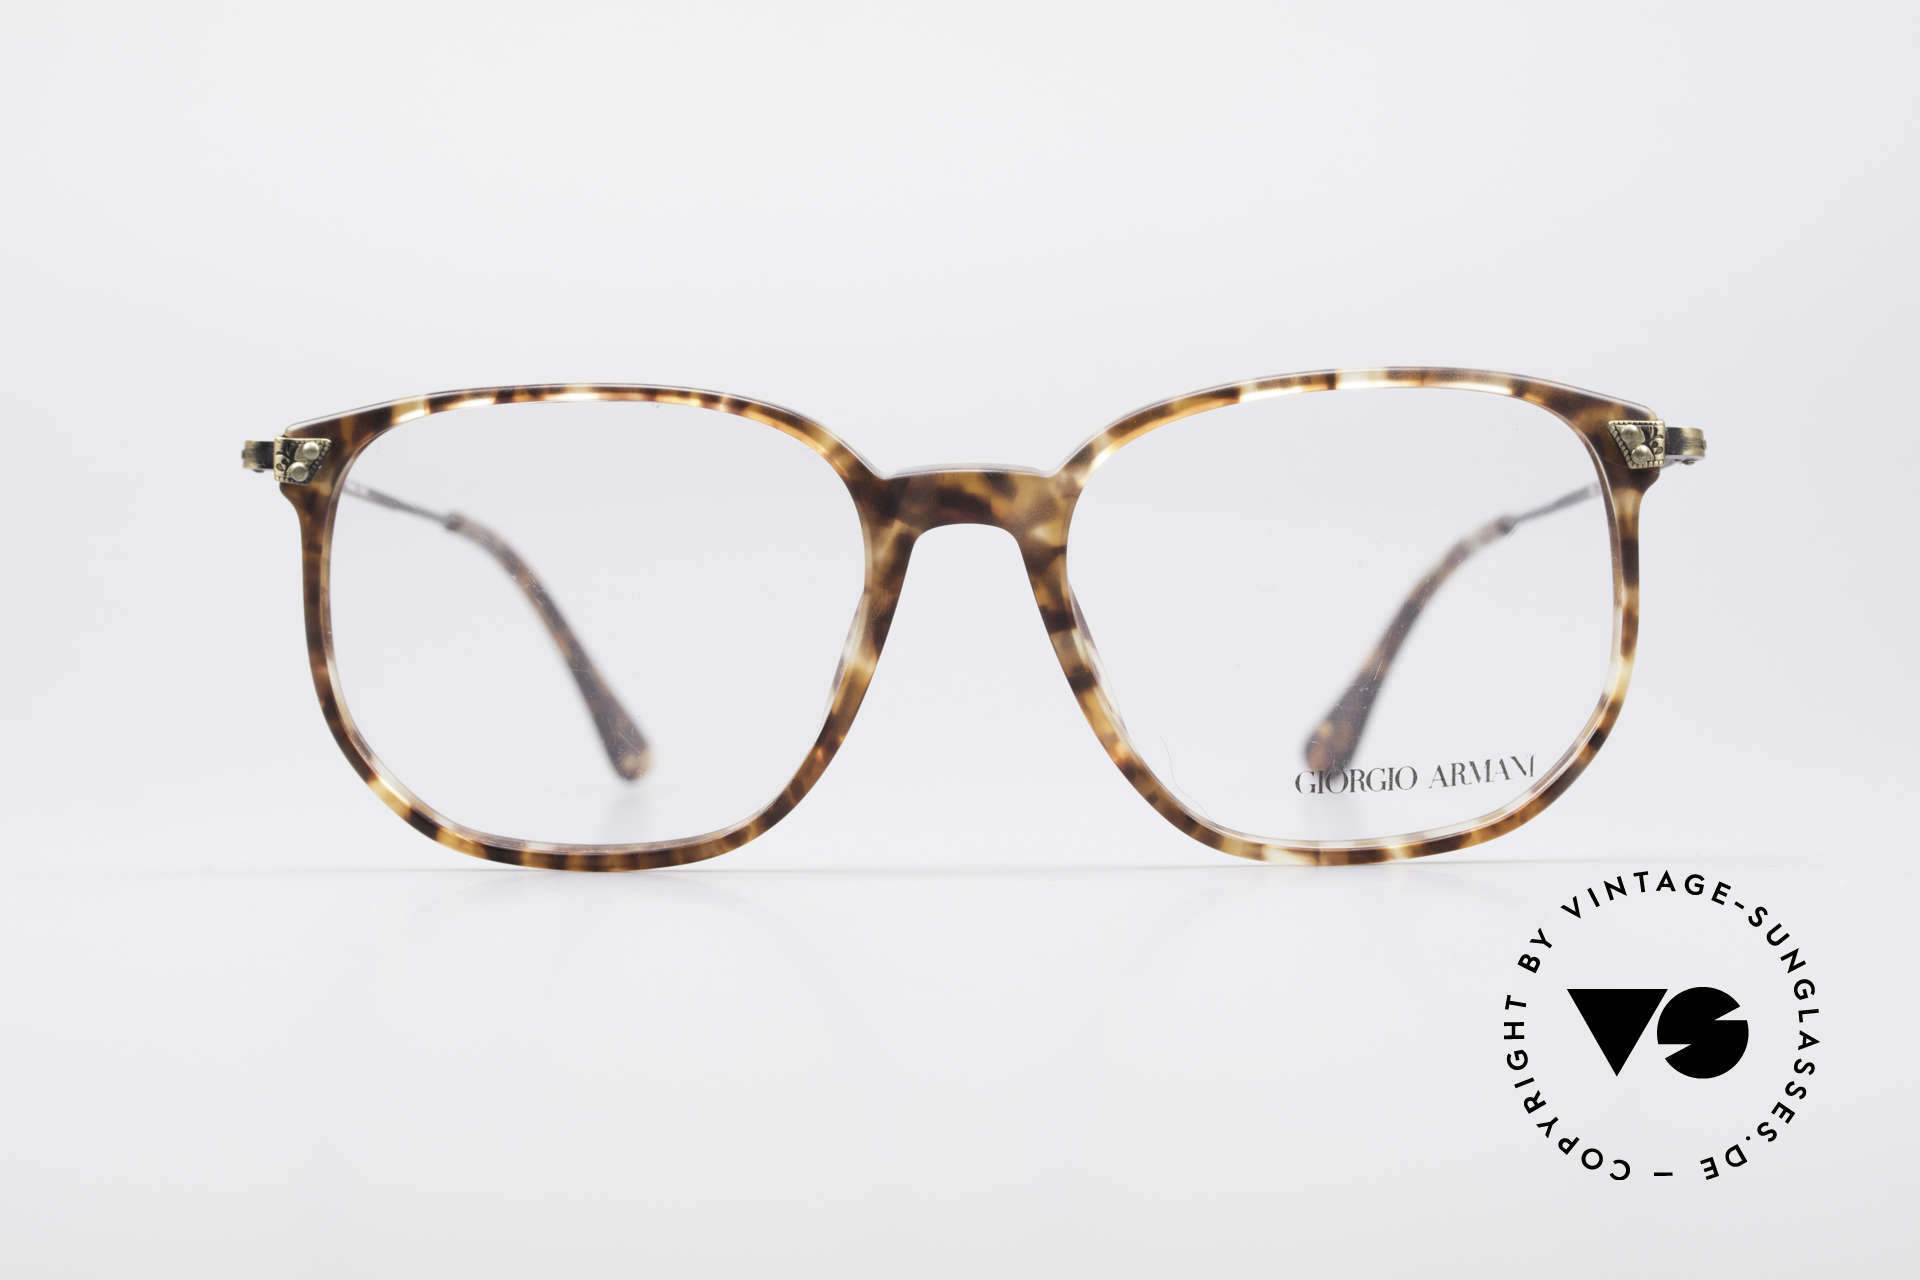 Giorgio Armani 335 True Vintage Eyeglasses, classic, timeless, elegant = characteristic of GA, Made for Men and Women